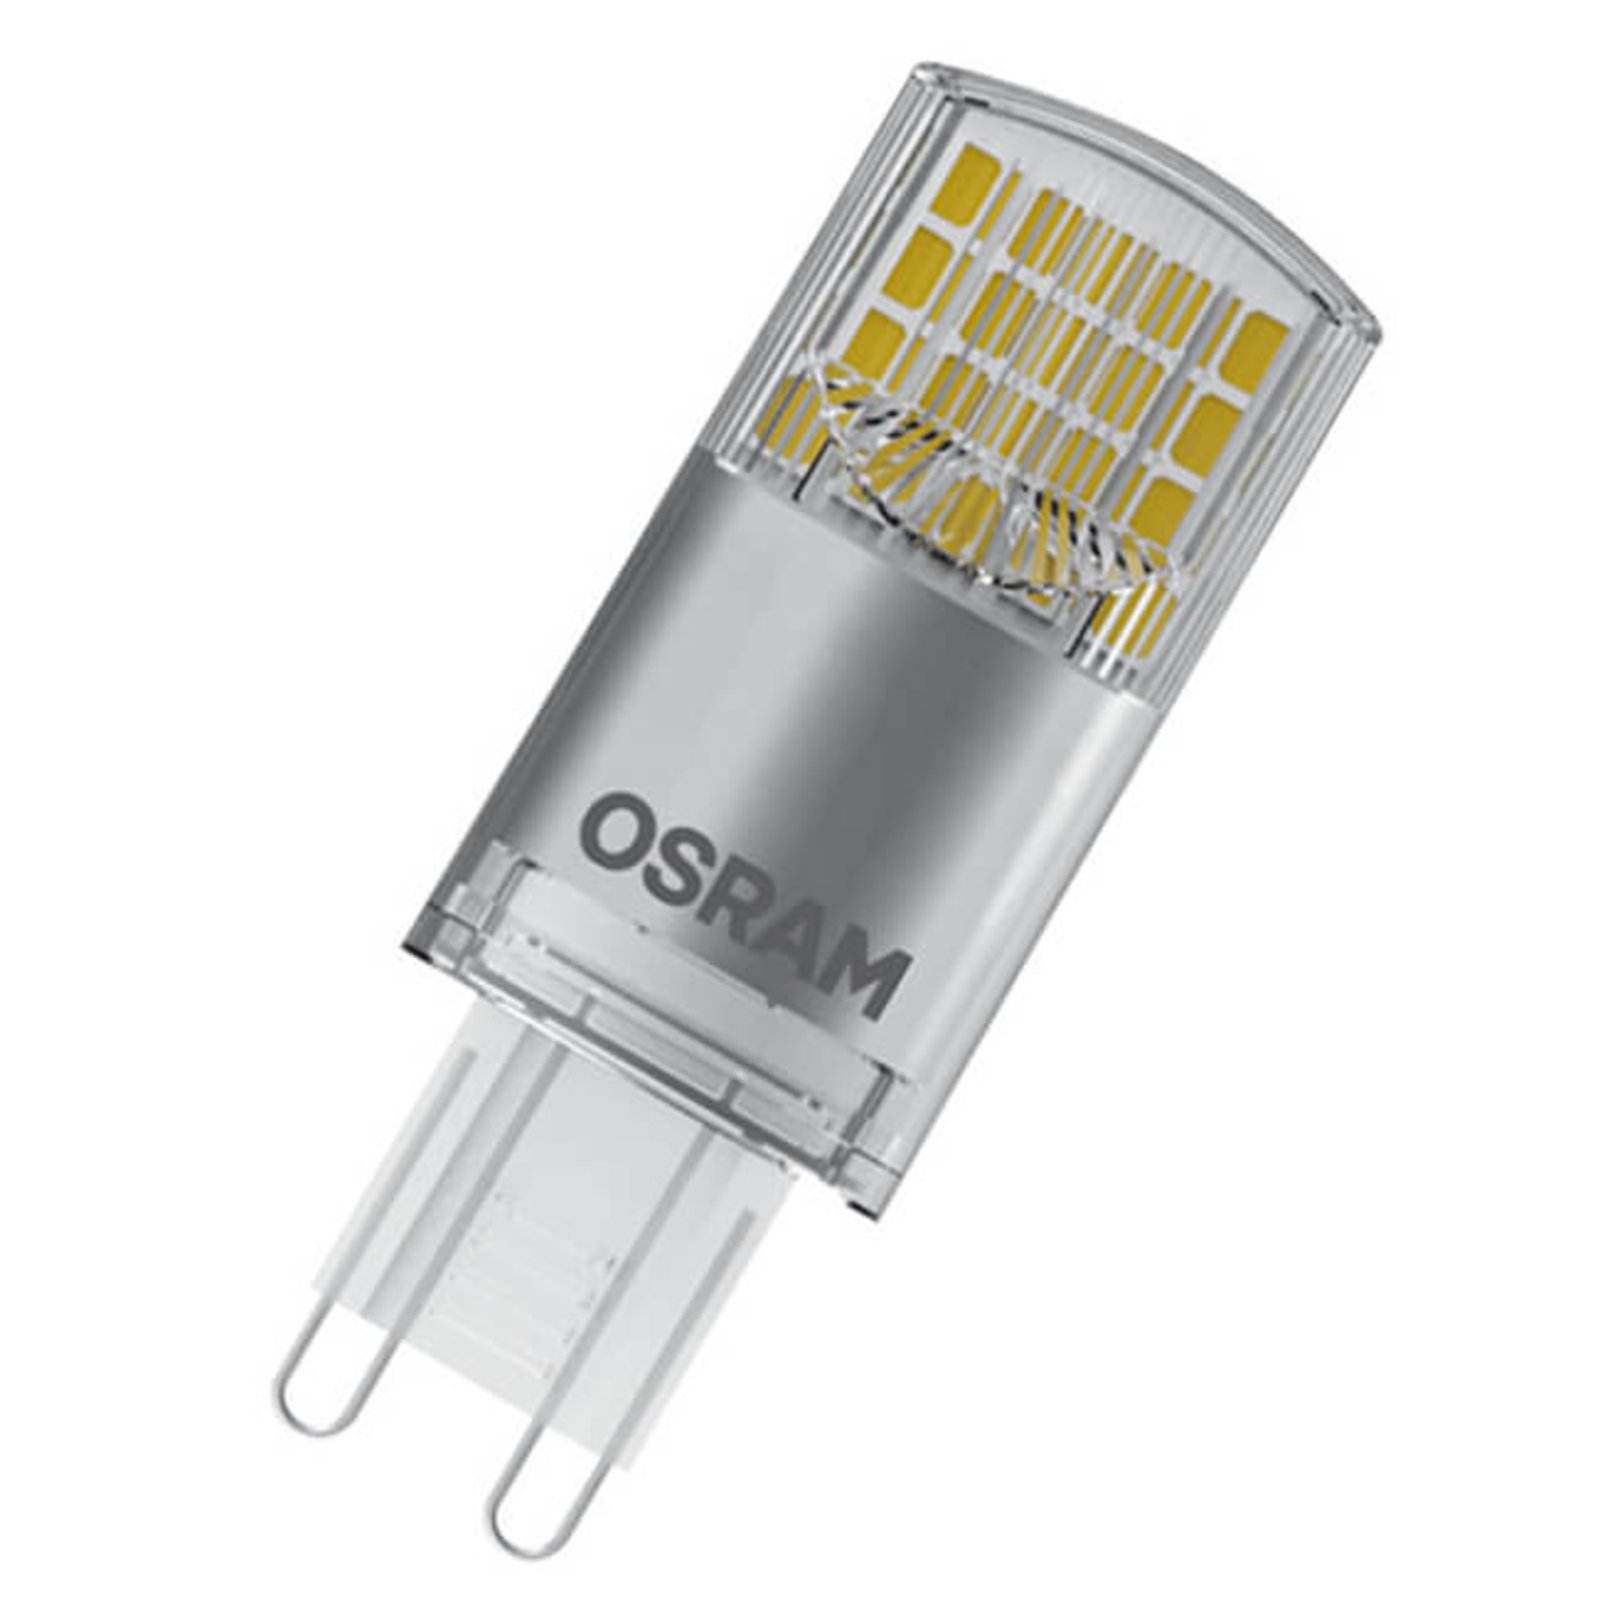 OSRAM bi-pin LED bulb G9 3.8 W warm white 470 lm